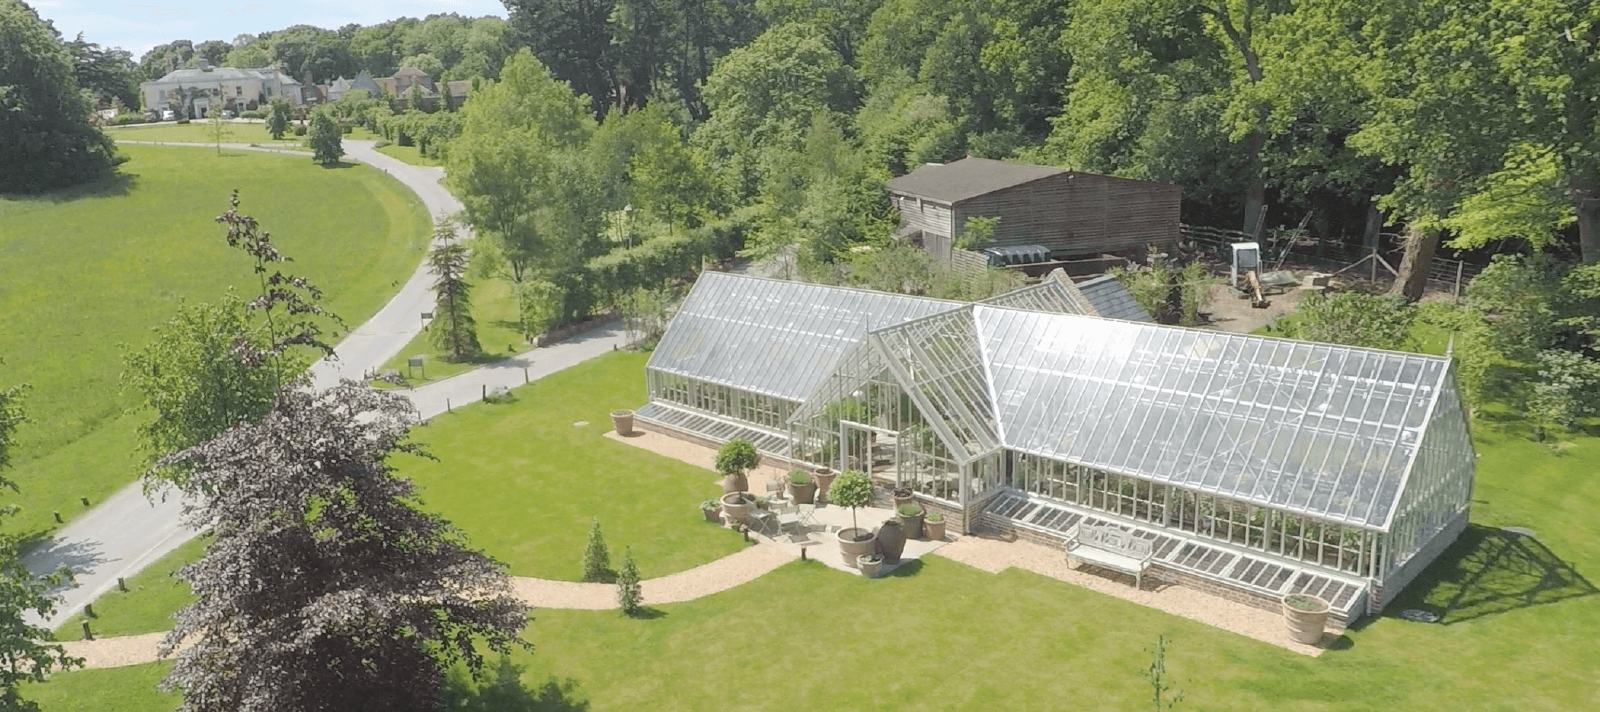 Lime wood hotel bespoke greenhouse